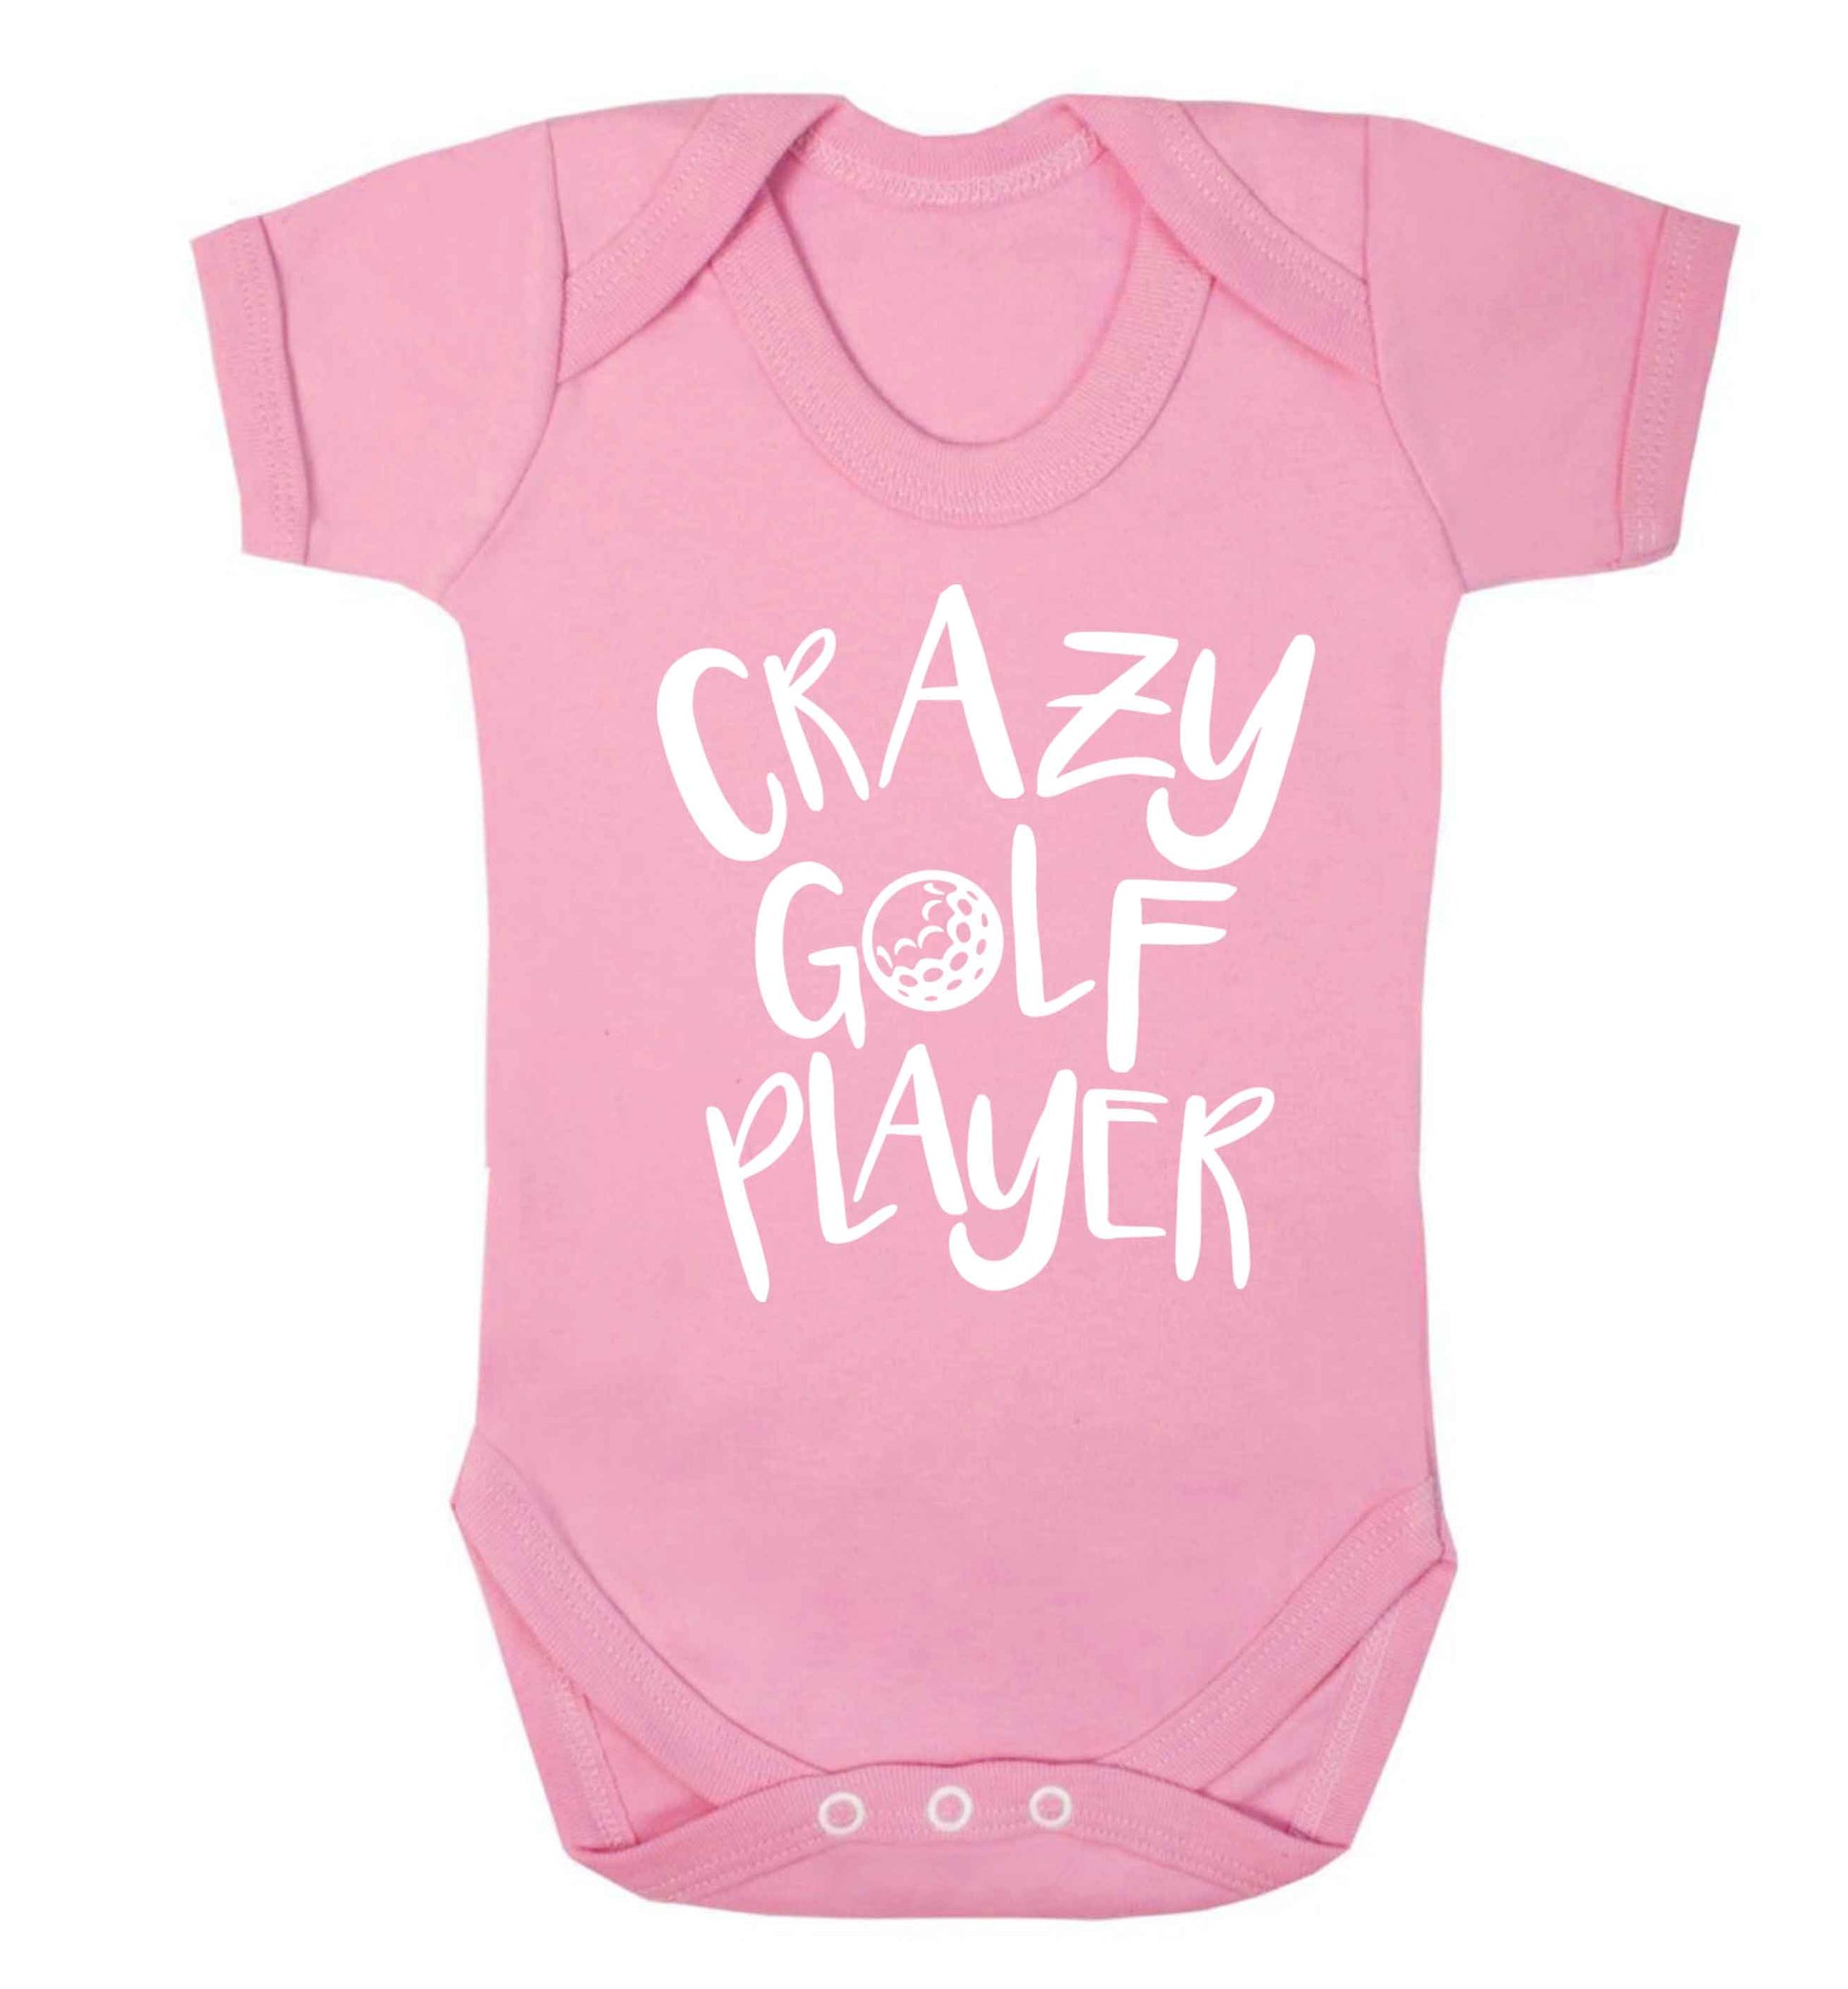 Crazy golf player Baby Vest pale pink 18-24 months